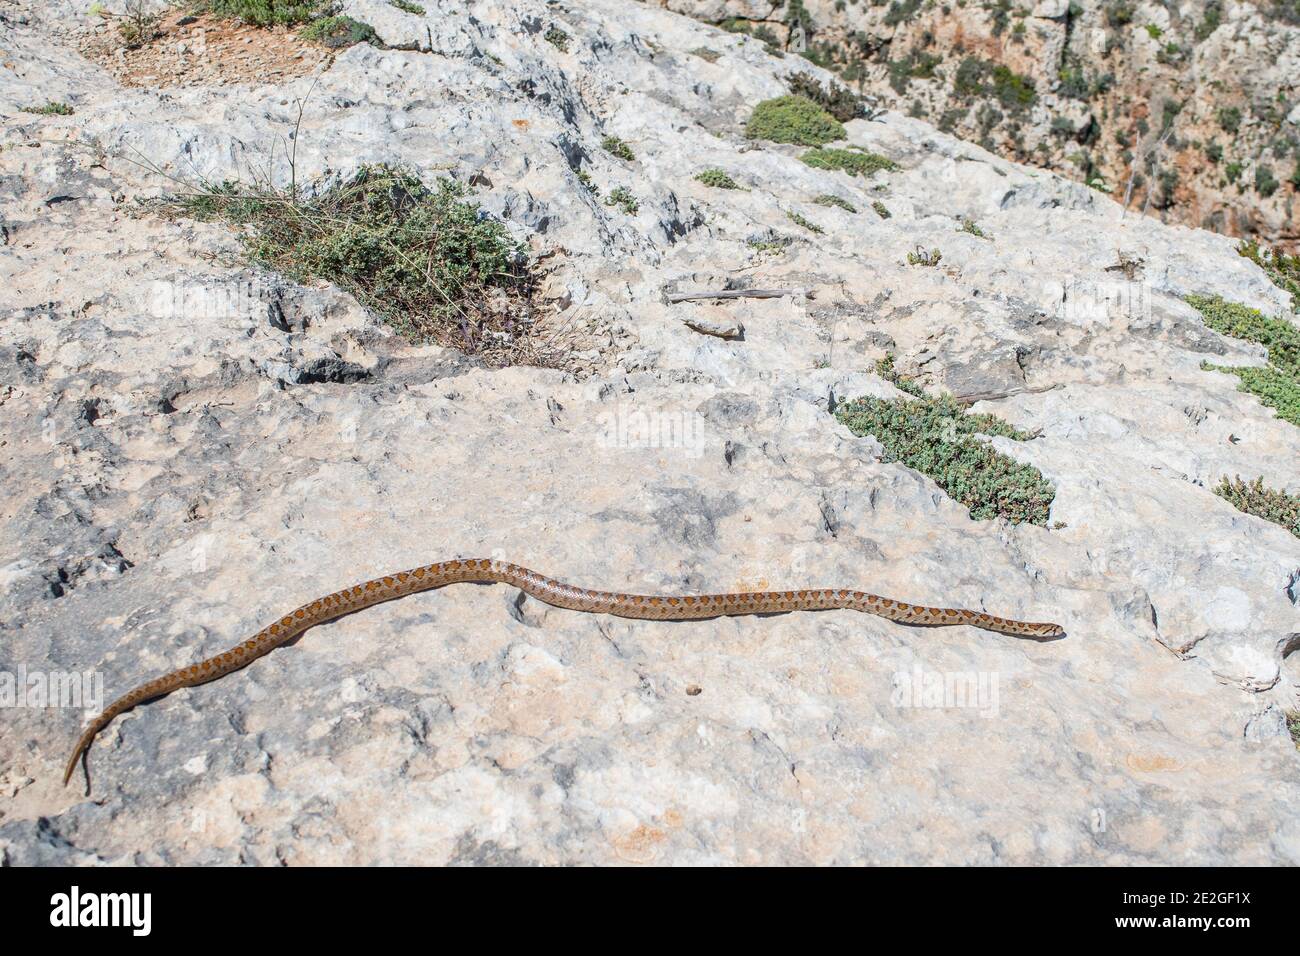 An adult Leopard Snake or European Ratsnake, Zamenis situla, slithering on rocks in Malta Stock Photo